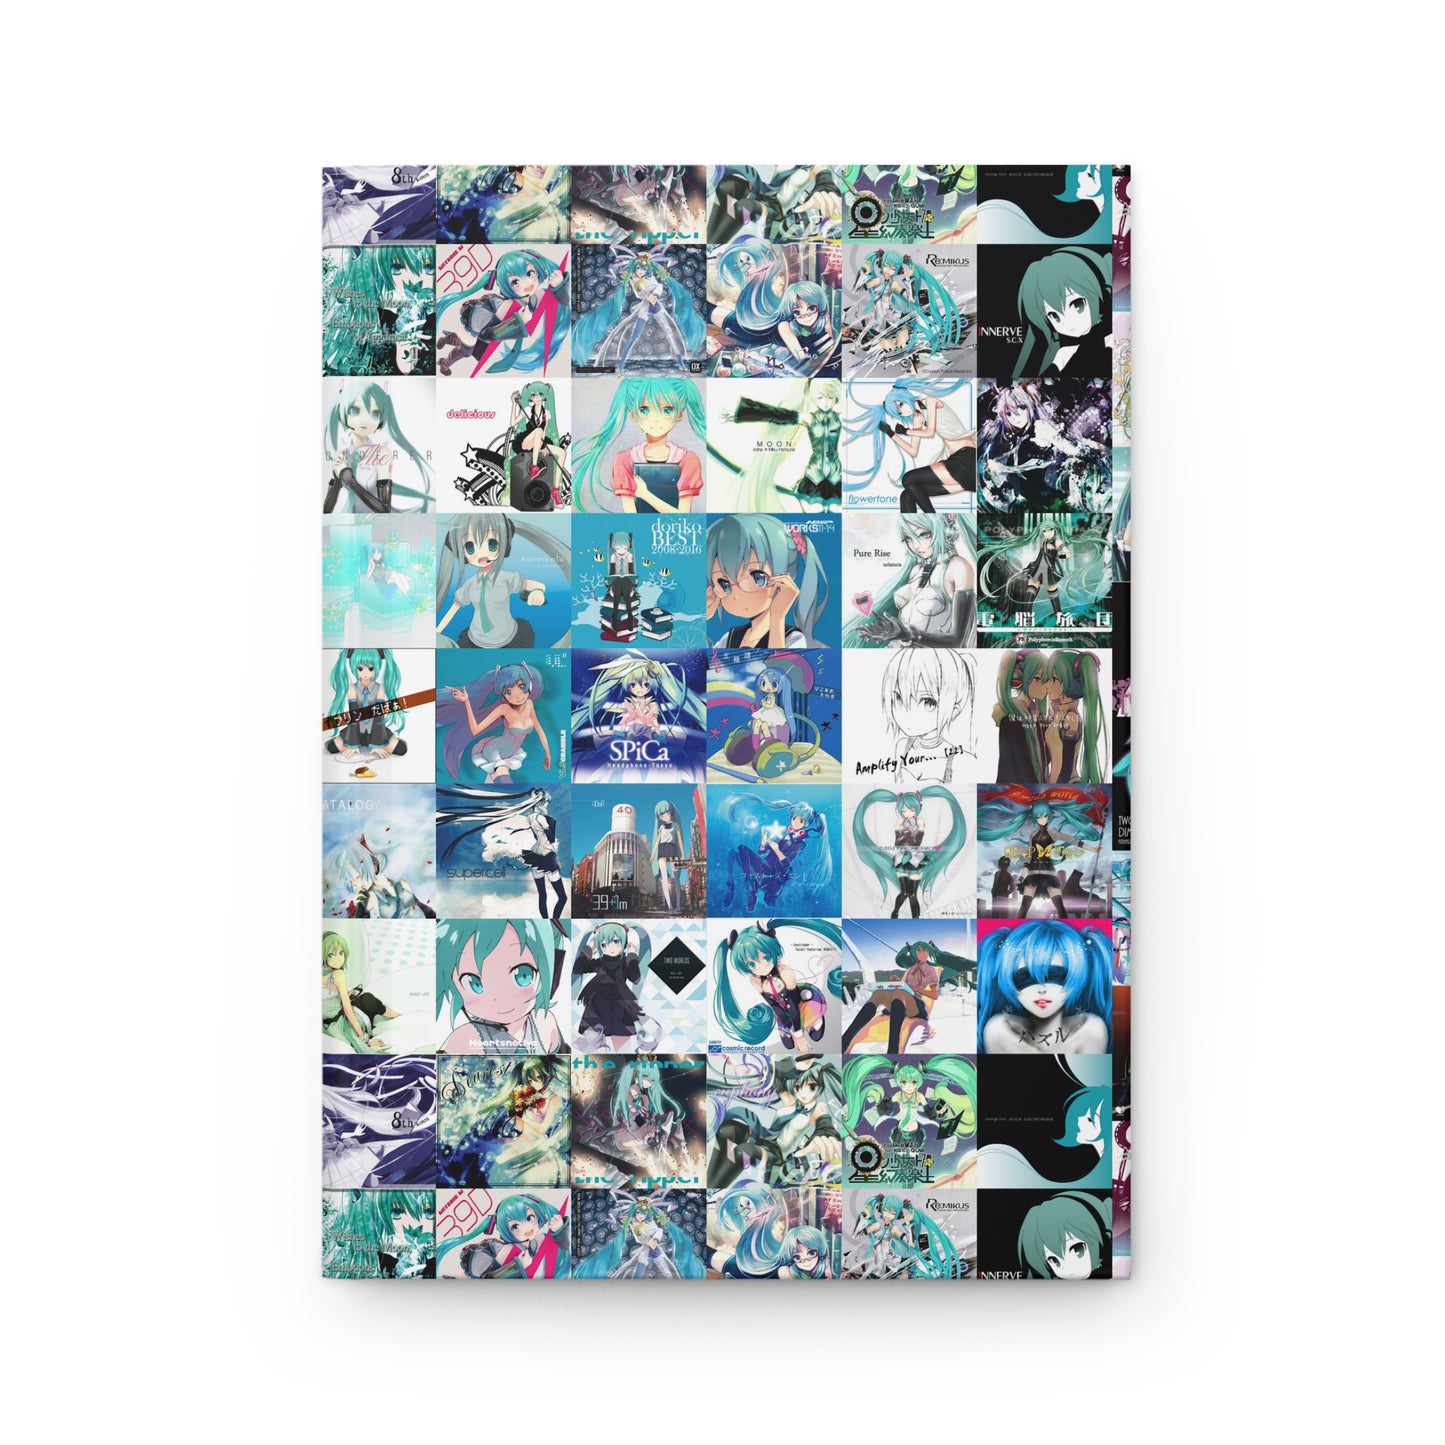 Hatsune Miku Album Cover Collage Hardcover Journal